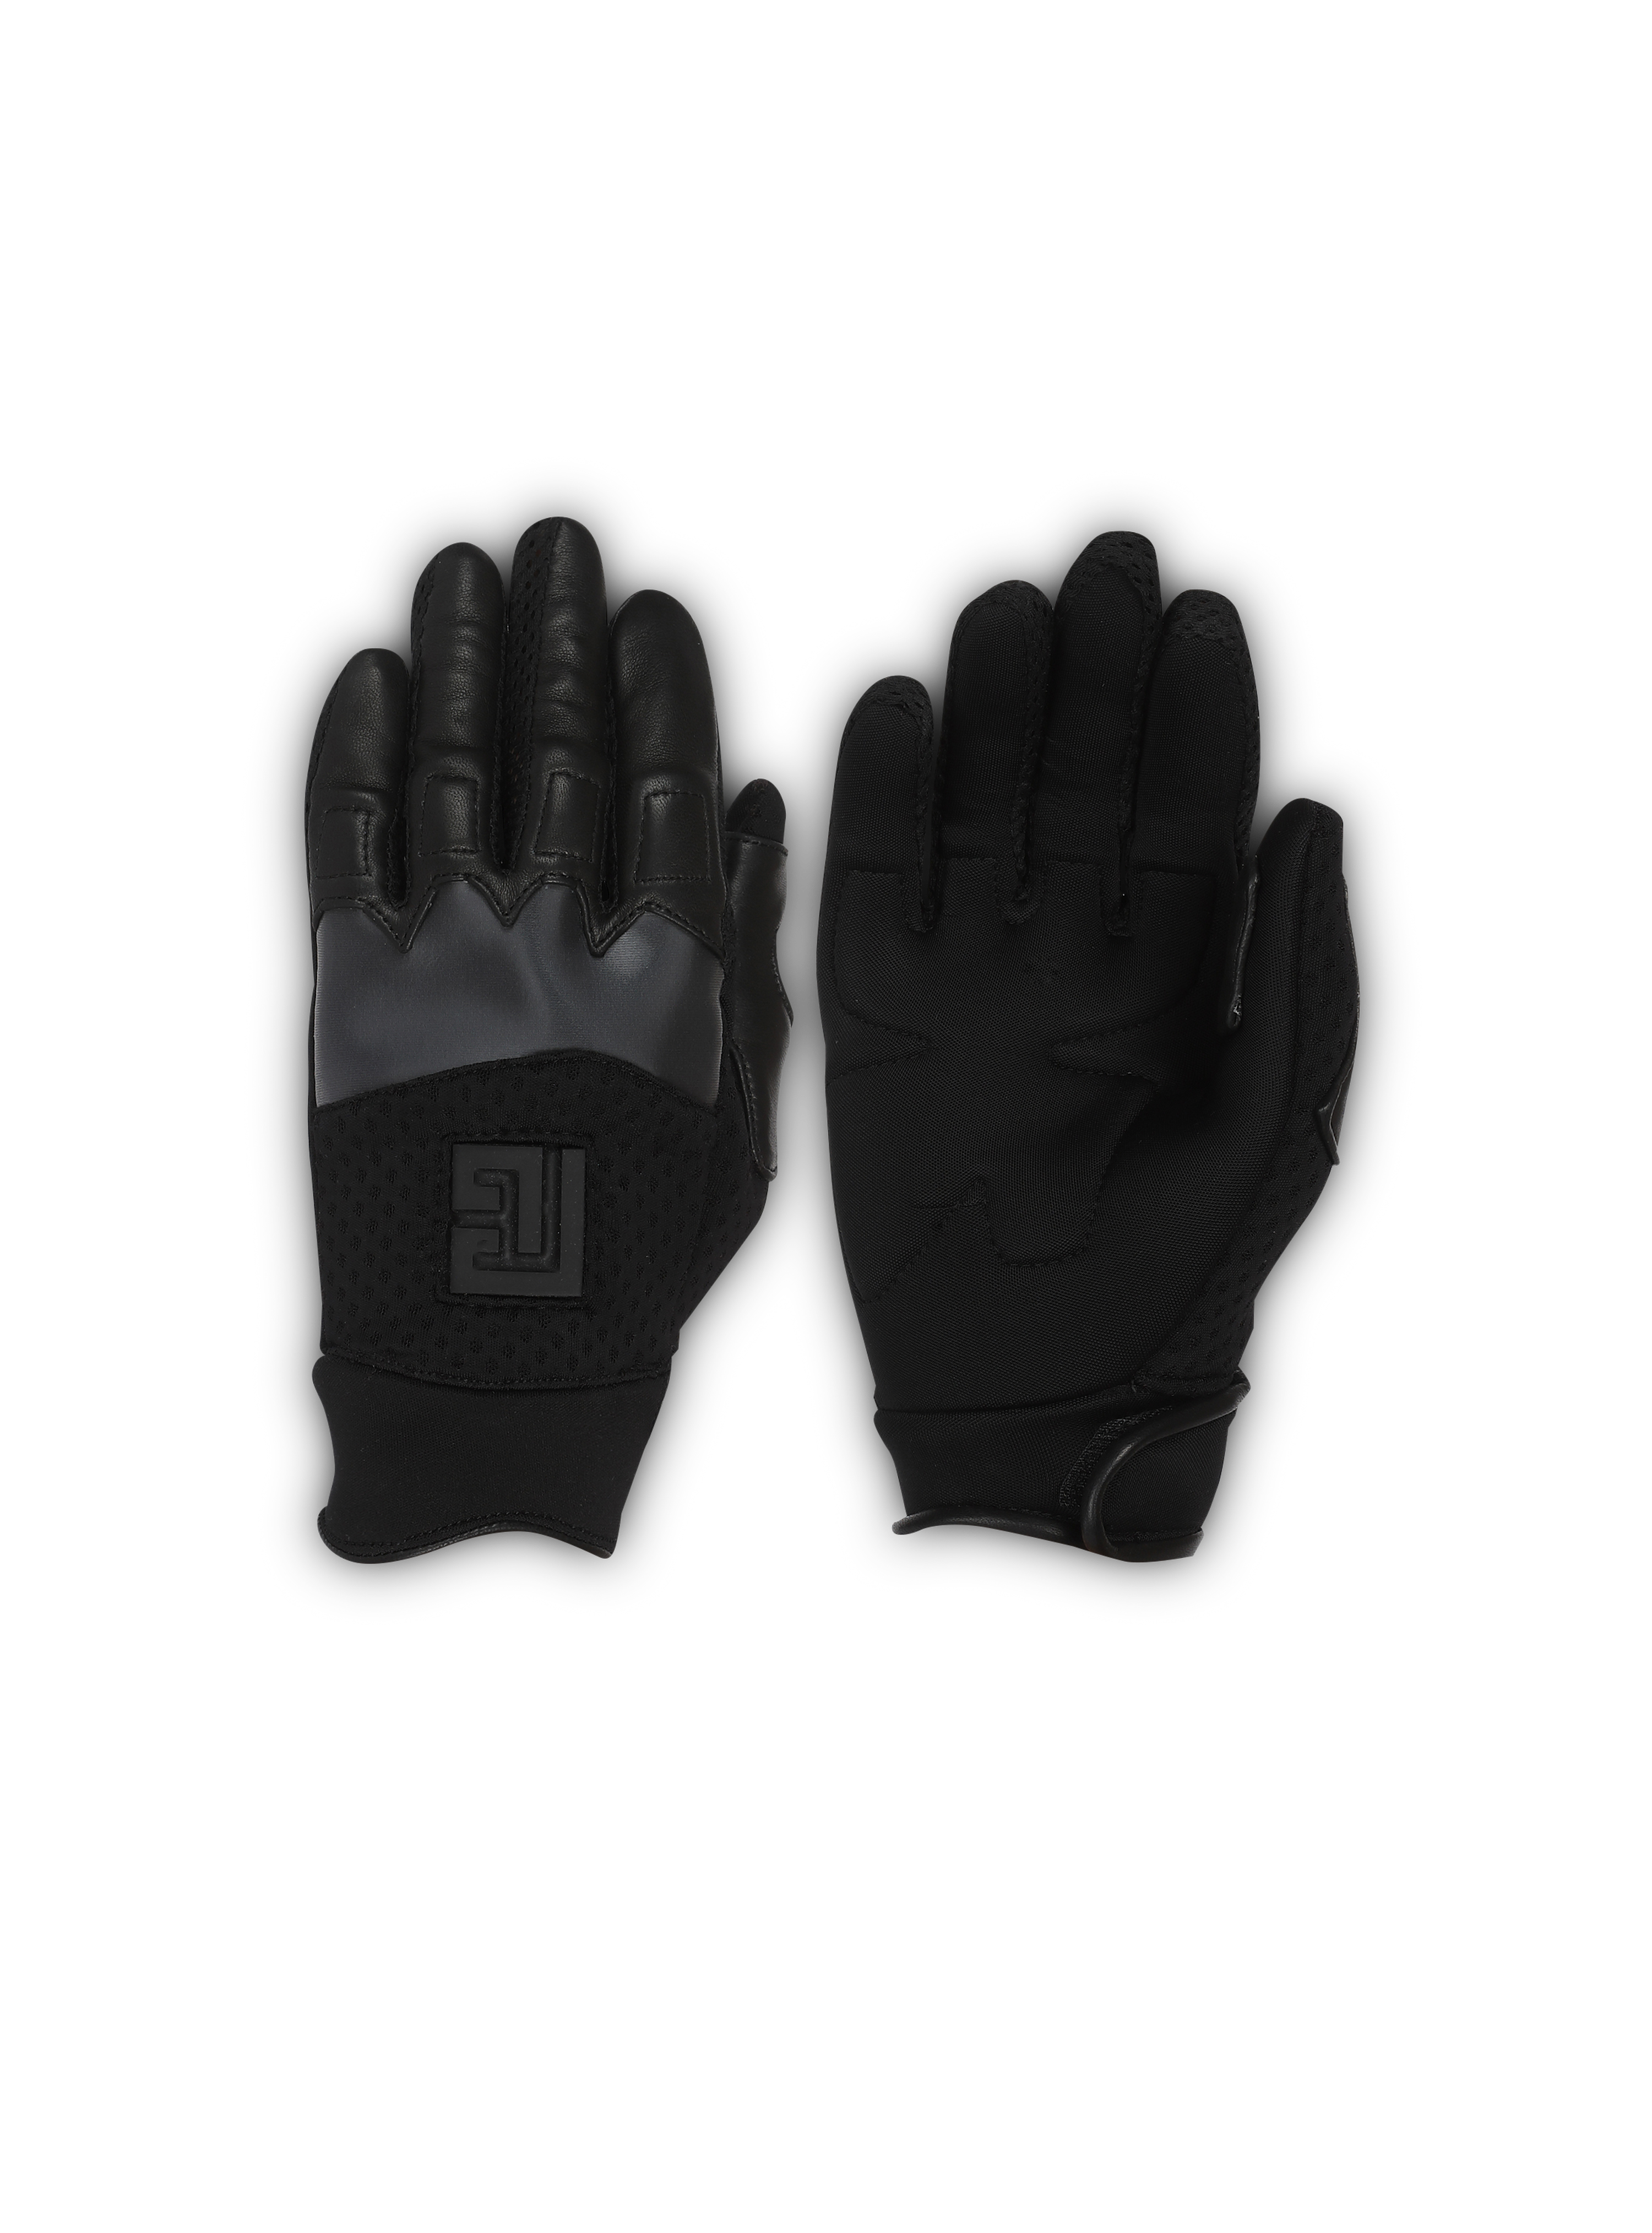 Paire de gants en néoprène, noir